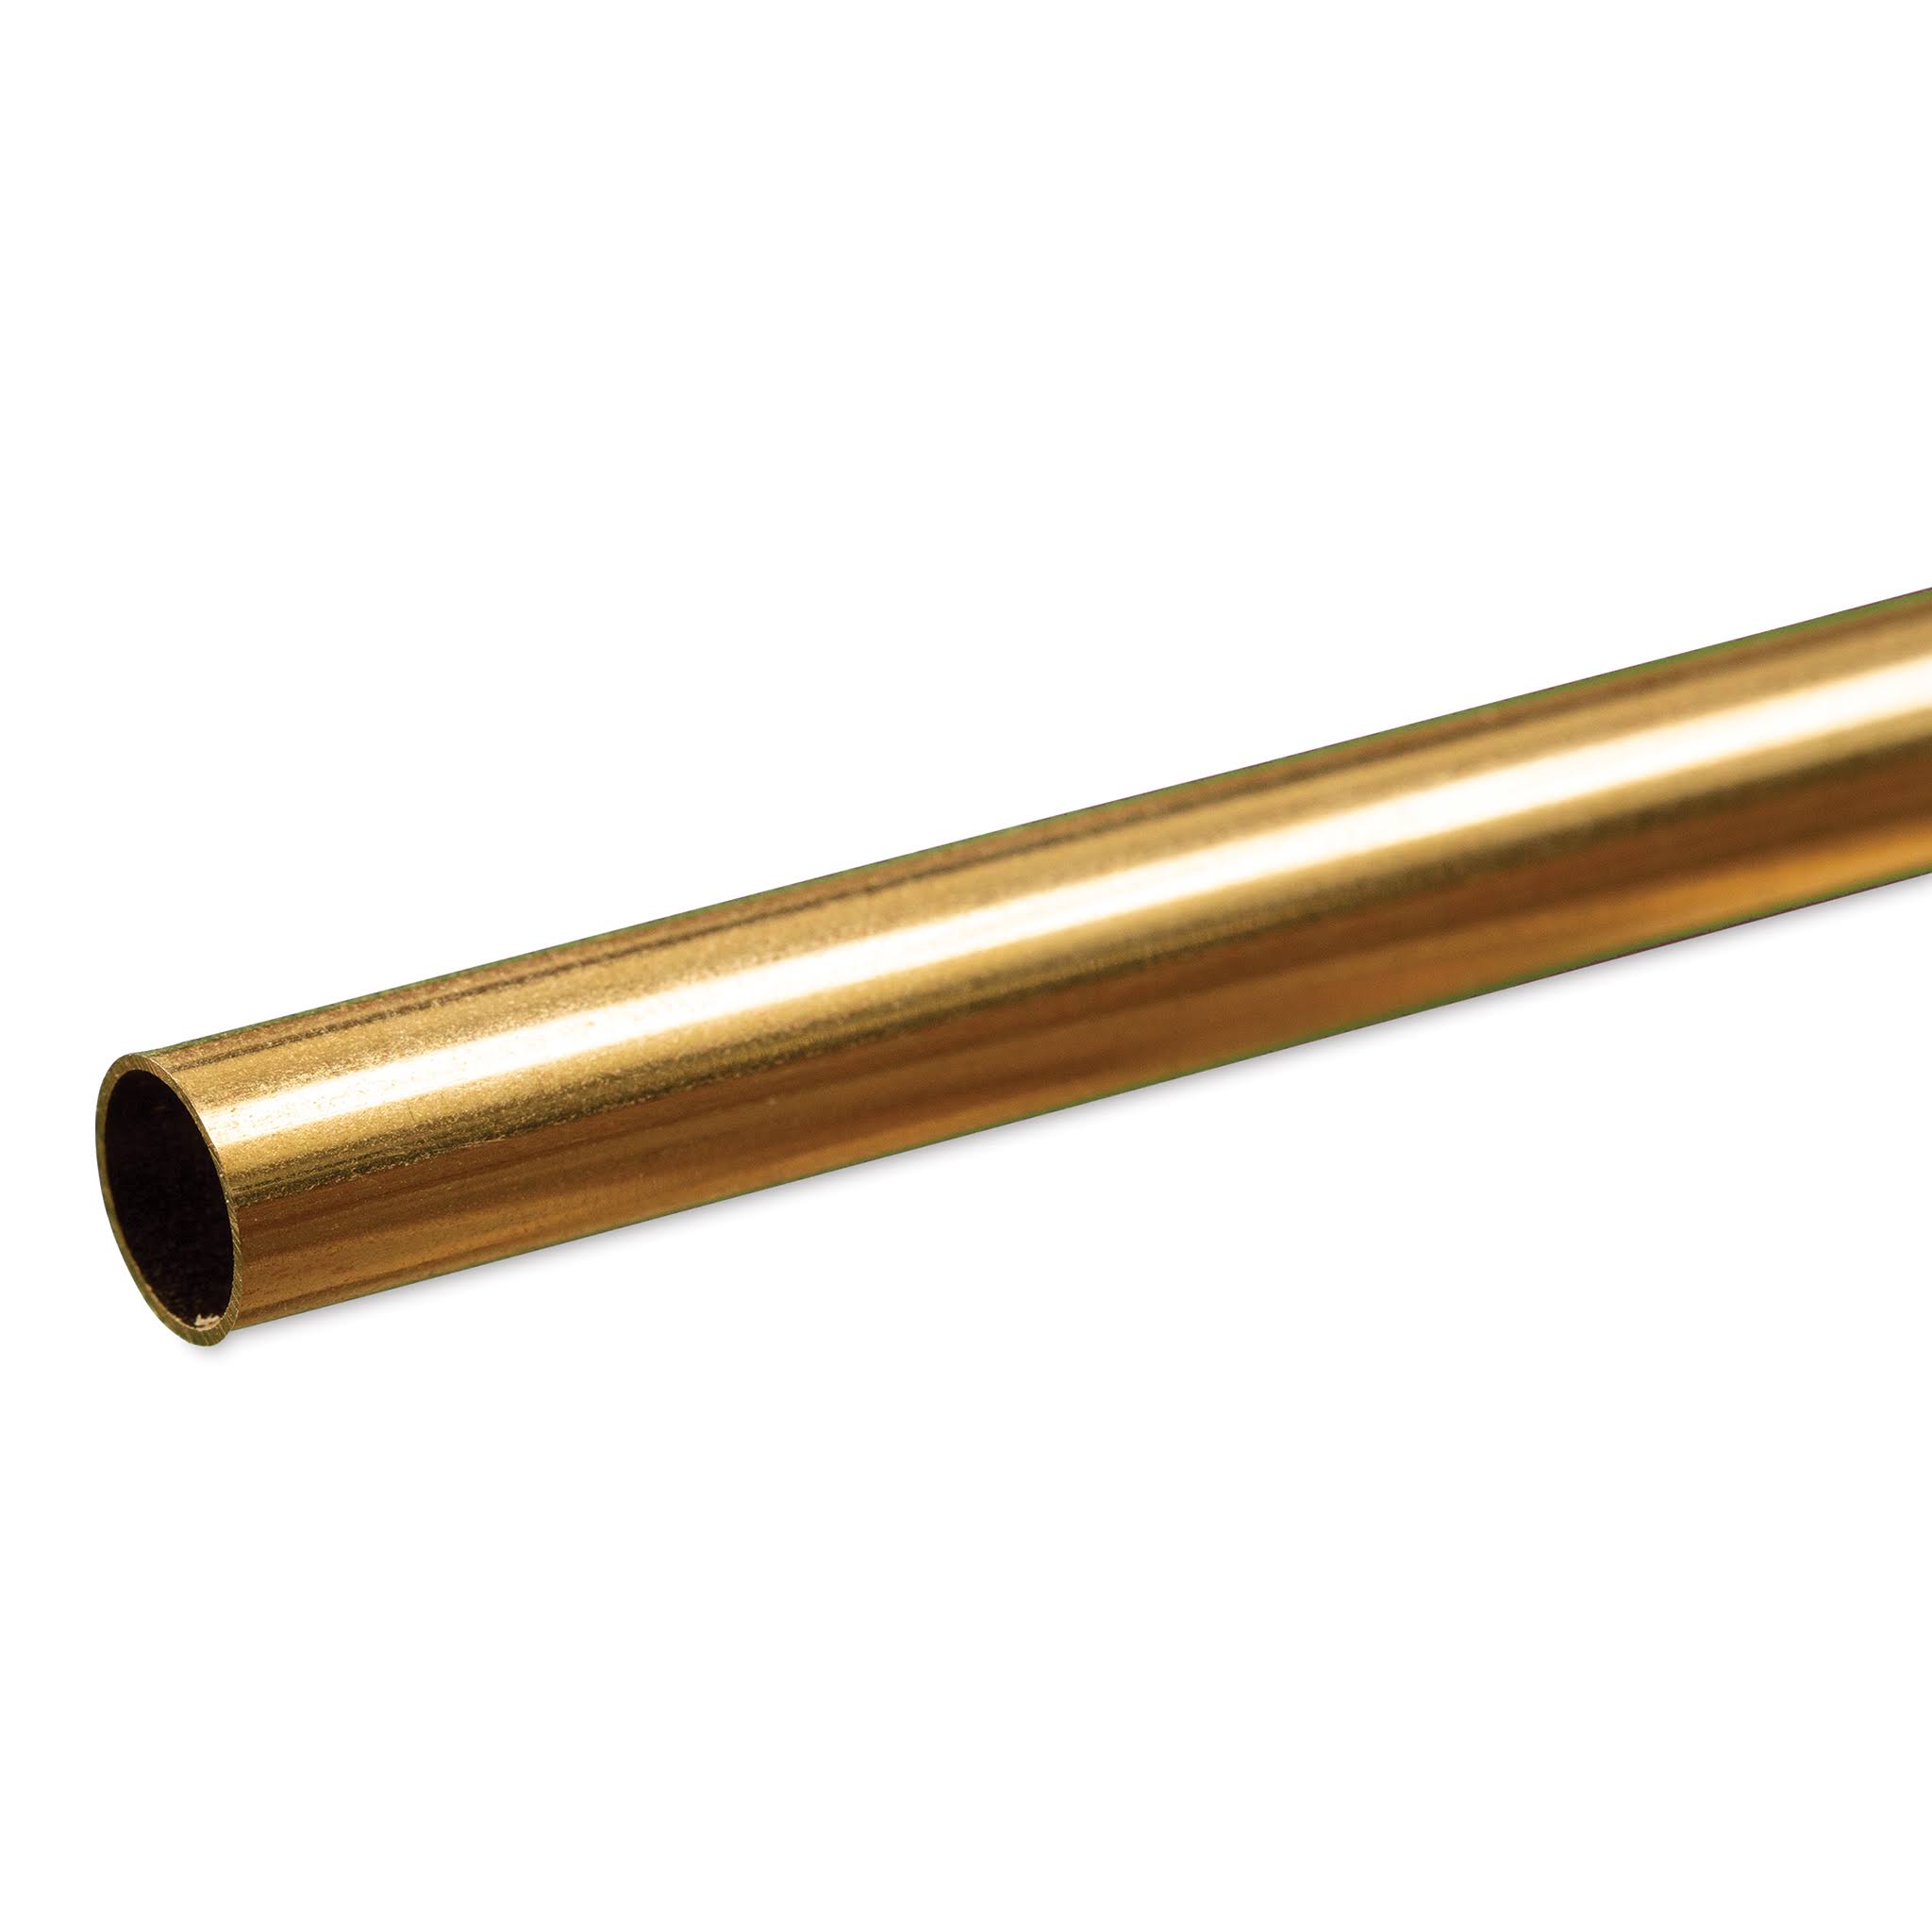 K&S Precision Metals 8136 13/32" Brass Tube (1 Pc)